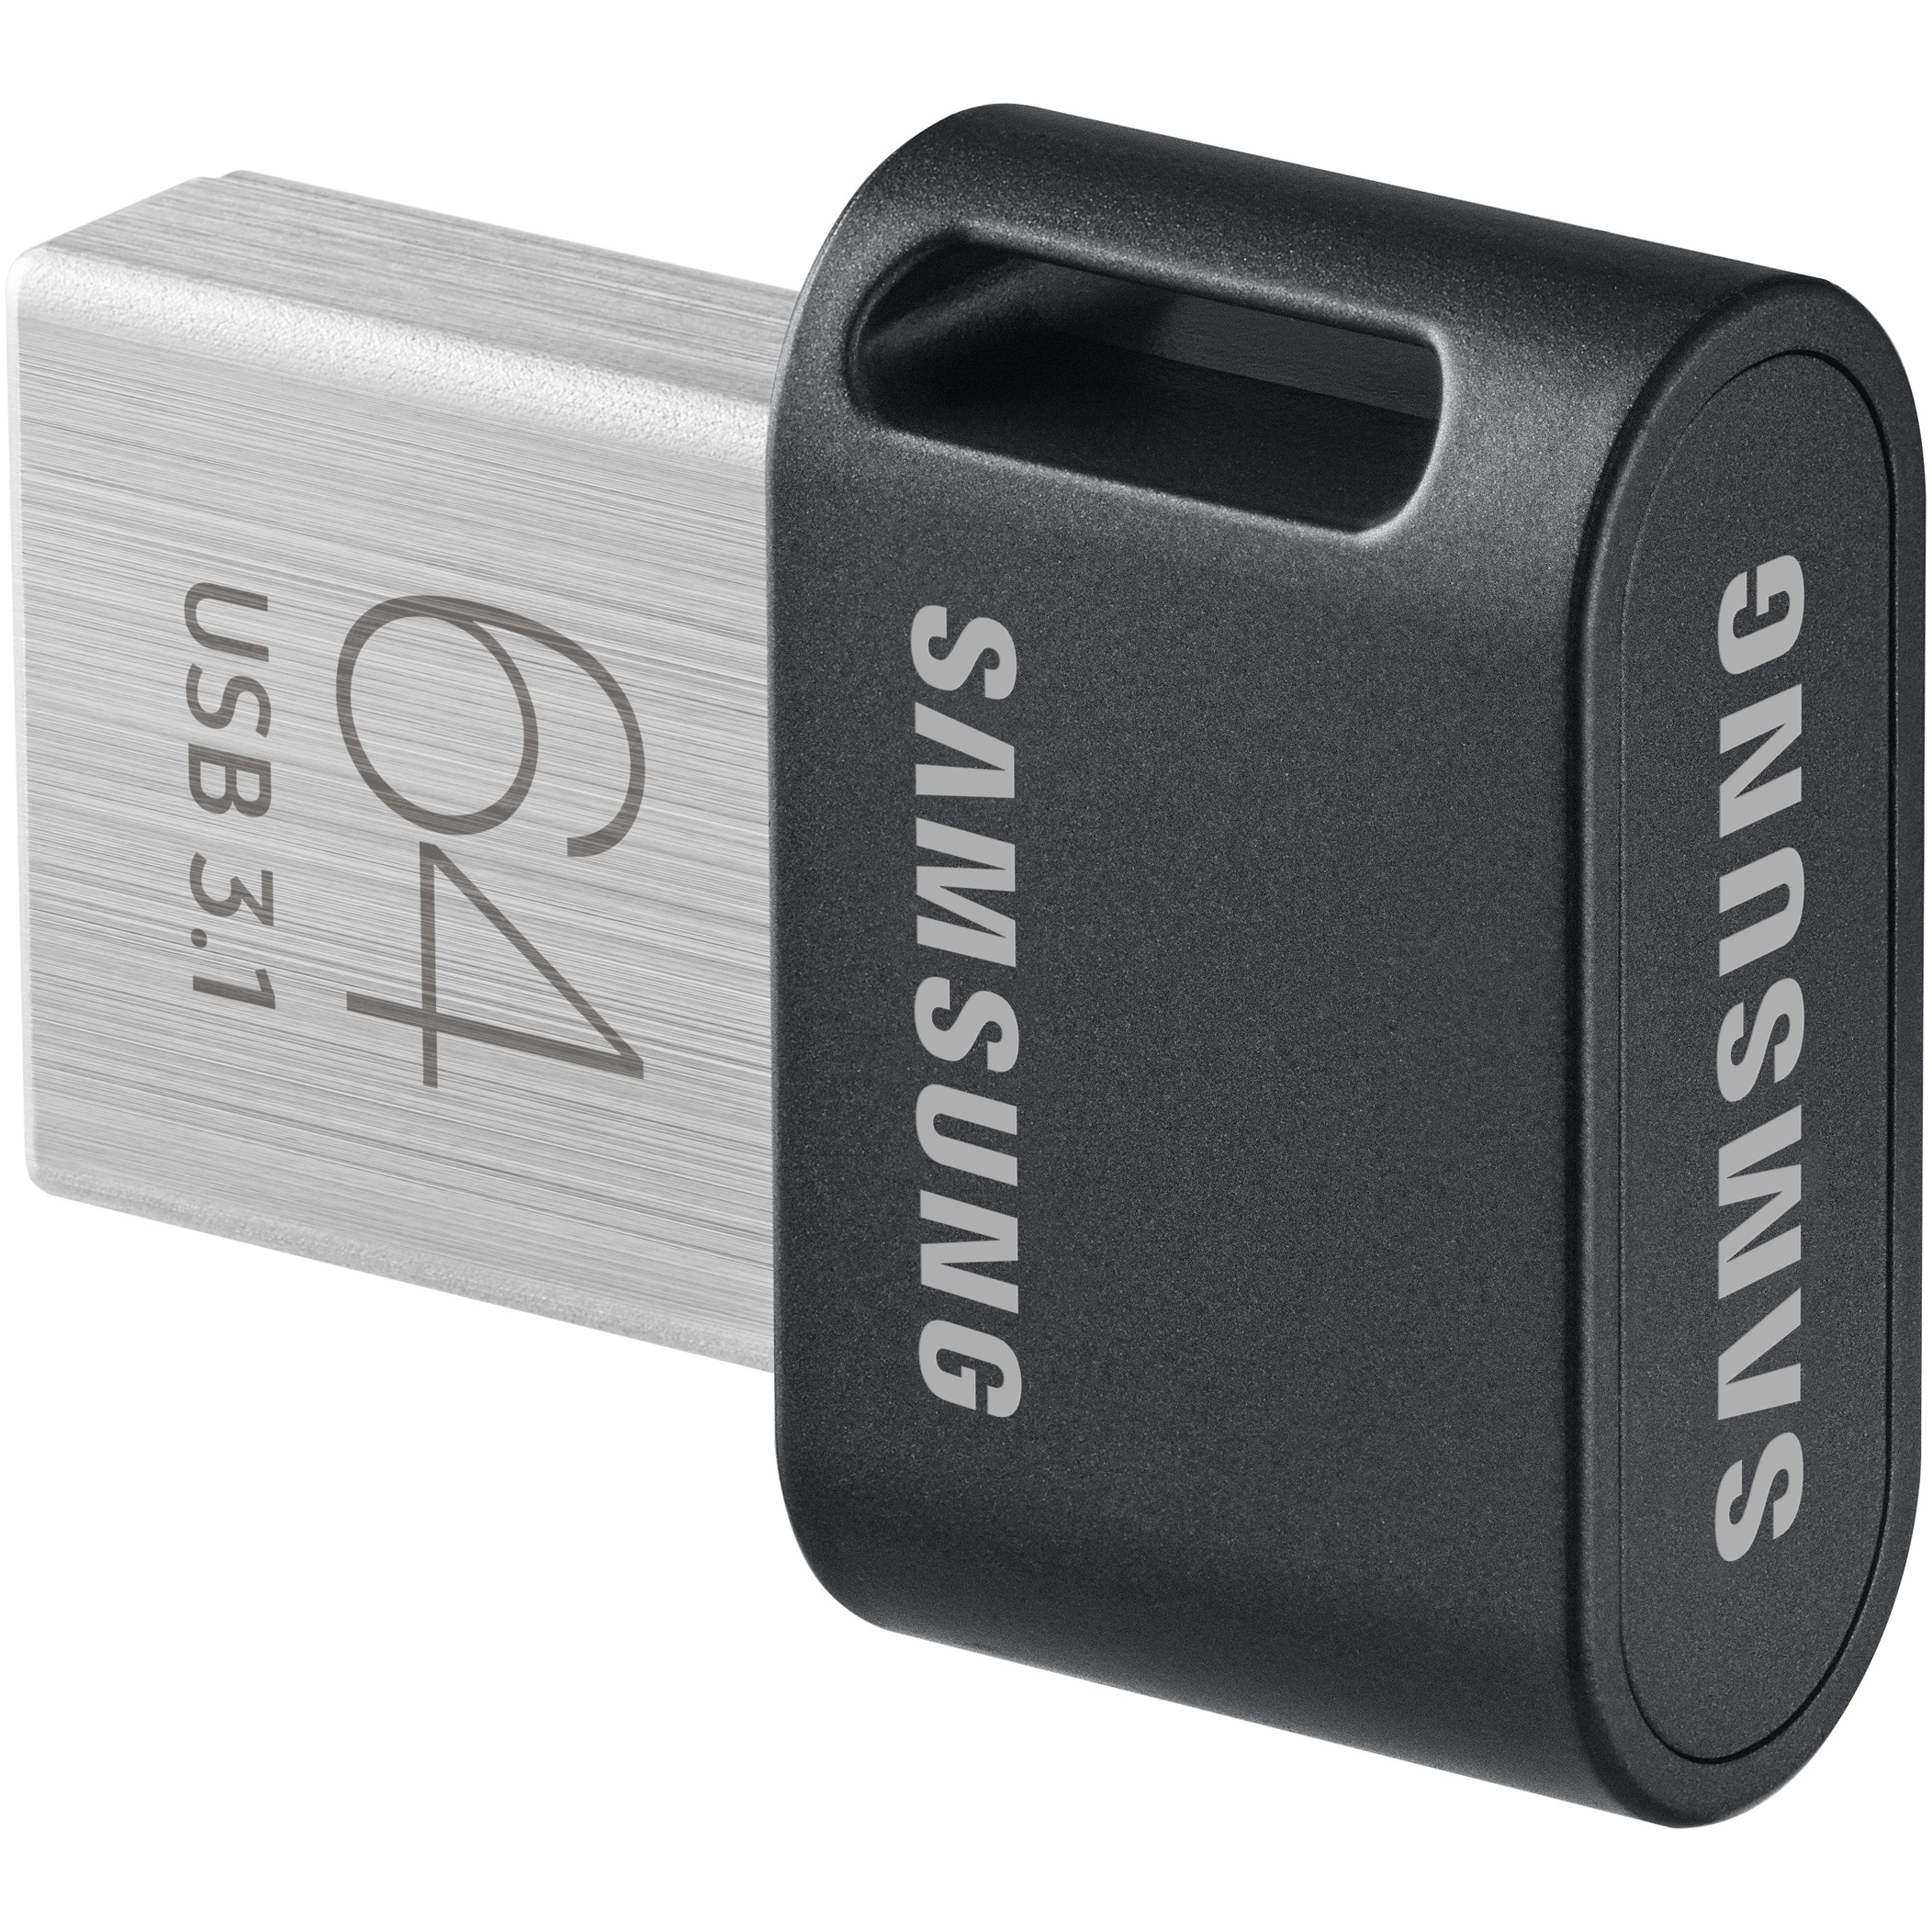 SAMSUNG MUF-64AB/APC, USB-Stick, Samsung MUF-64AB USB  (BILD3)